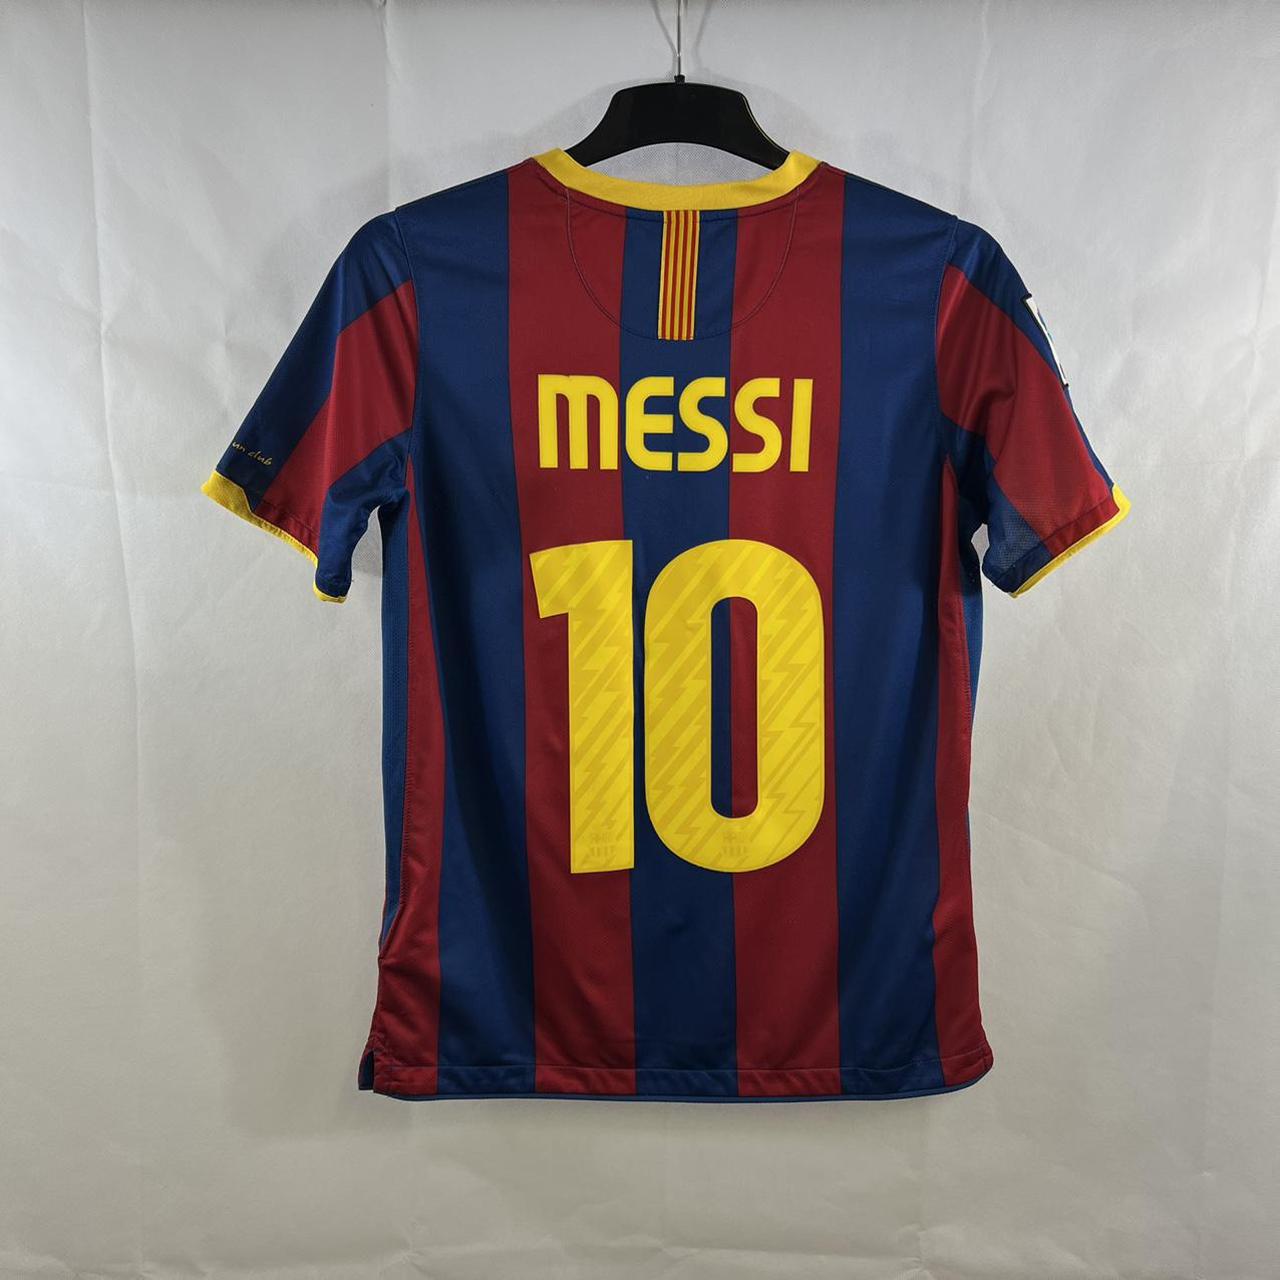 Barcelona Messi 10 Home Football Shirt 2010/11... - Depop